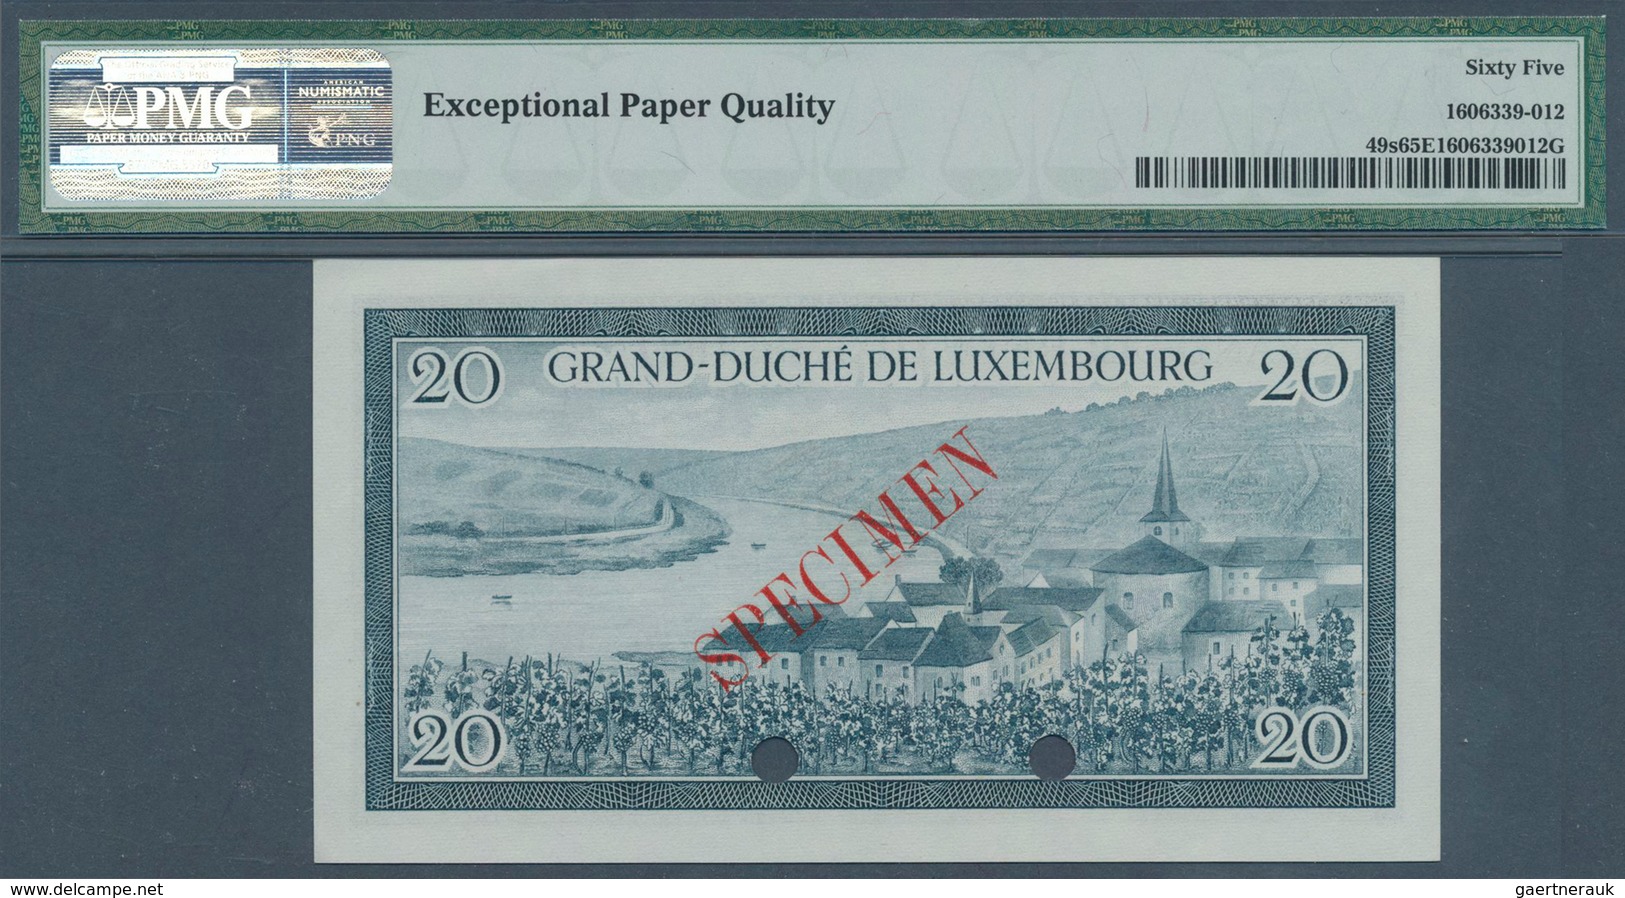 01939 Luxembourg: 20 Francs ND(1955) Specimen P. 49s, Condition: PMG Graded 65 GEM UNC EPQ. - Luxemburg